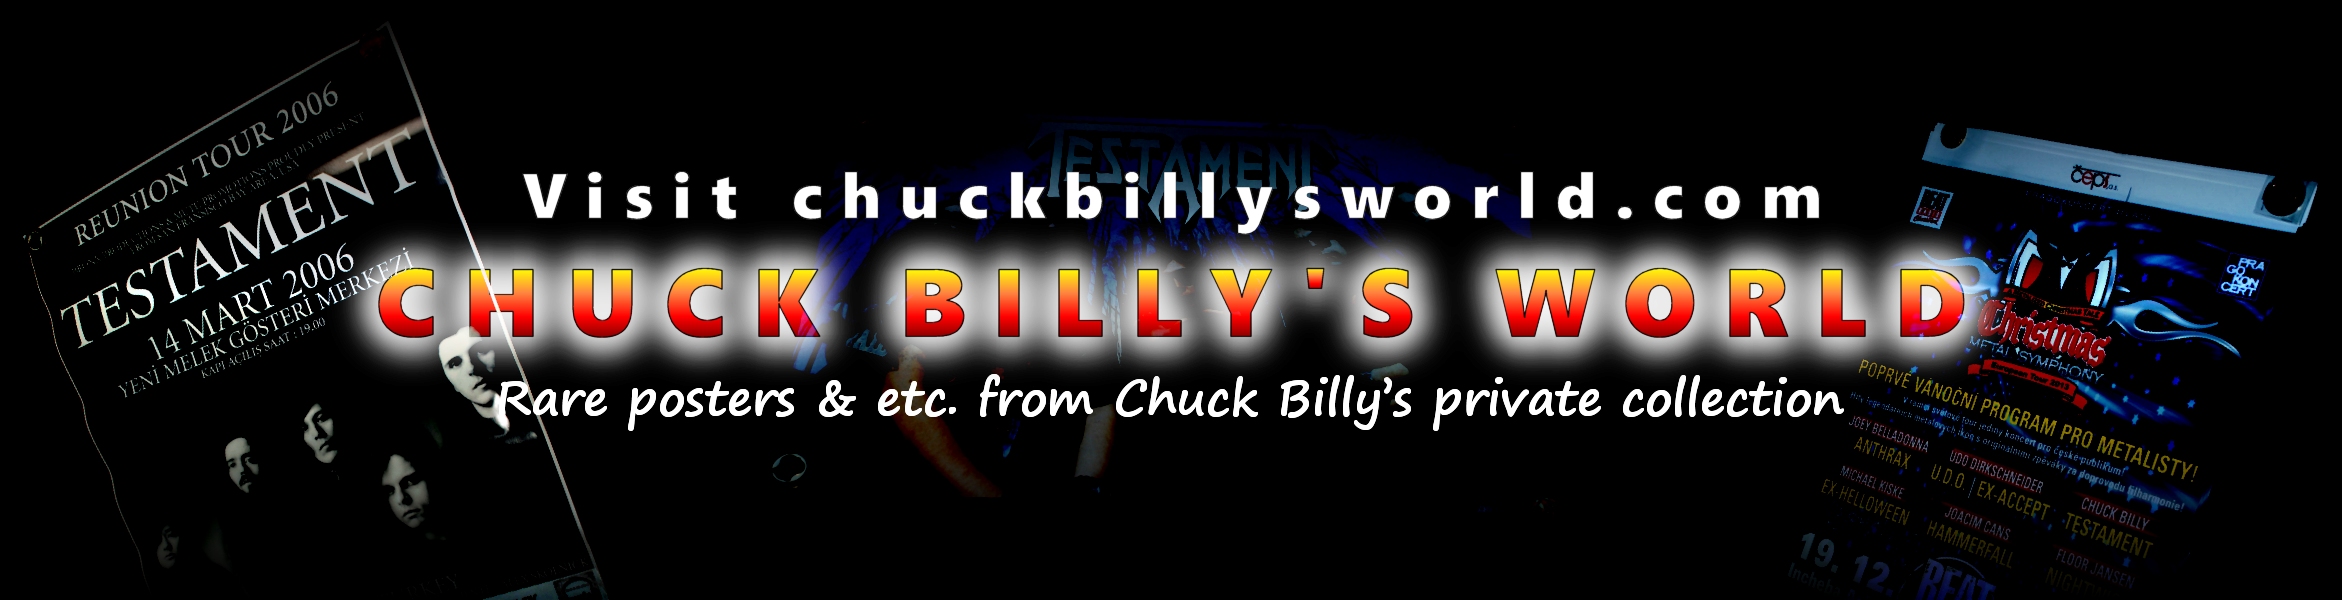 Chuck Billy's World